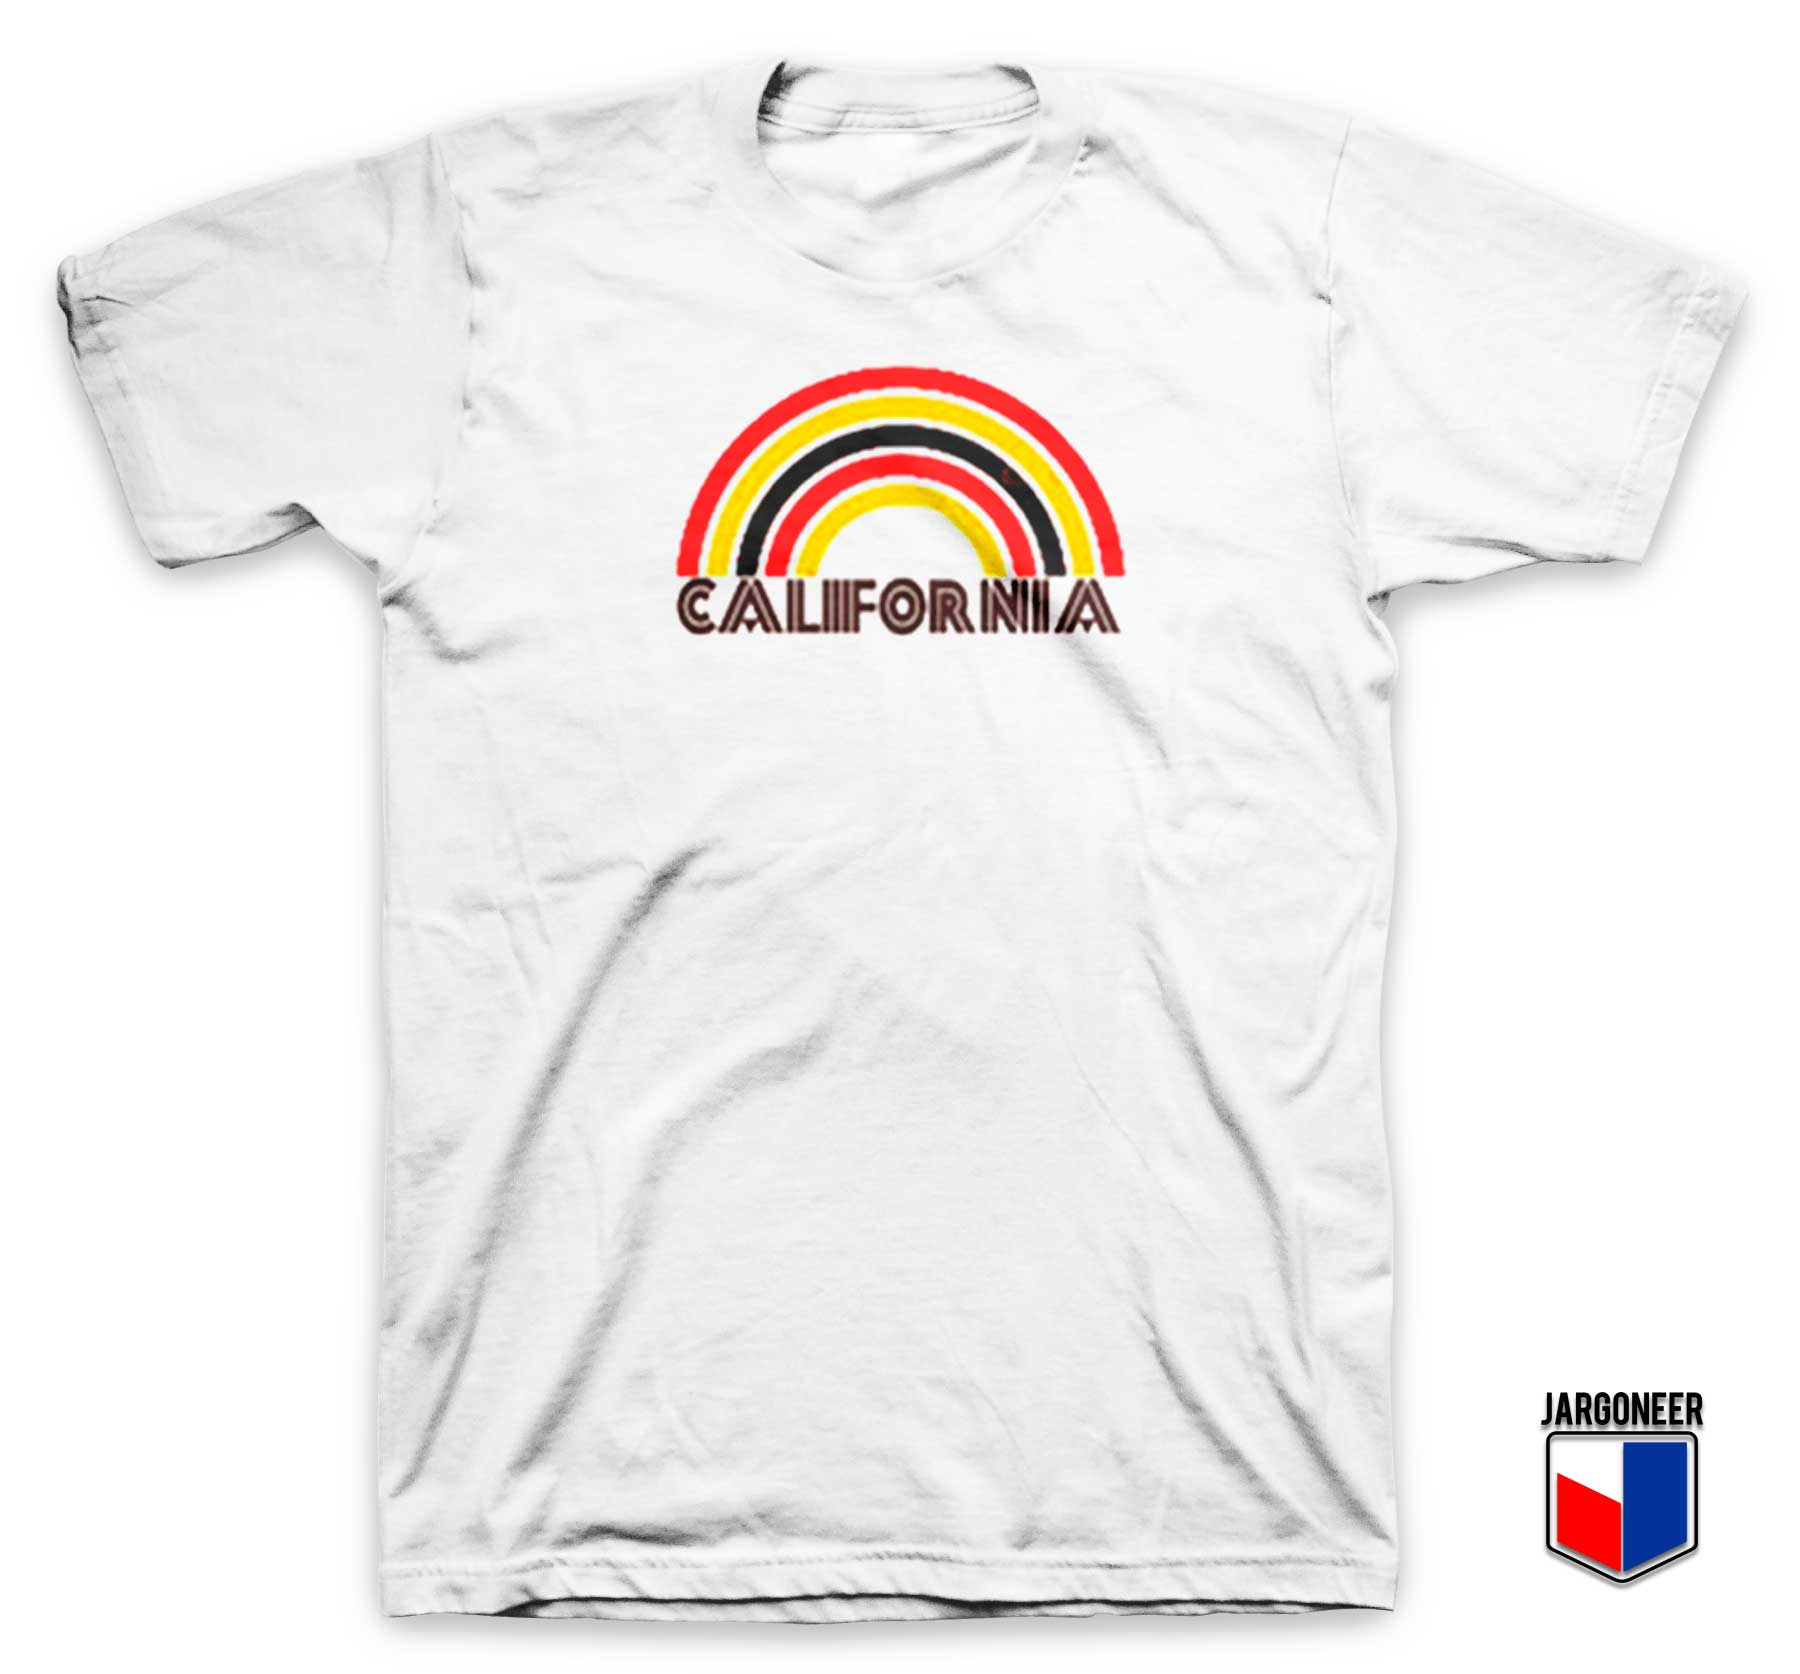 California Flocked Rainbow T Shirt - Shop Unique Graphic Cool Shirt Designs